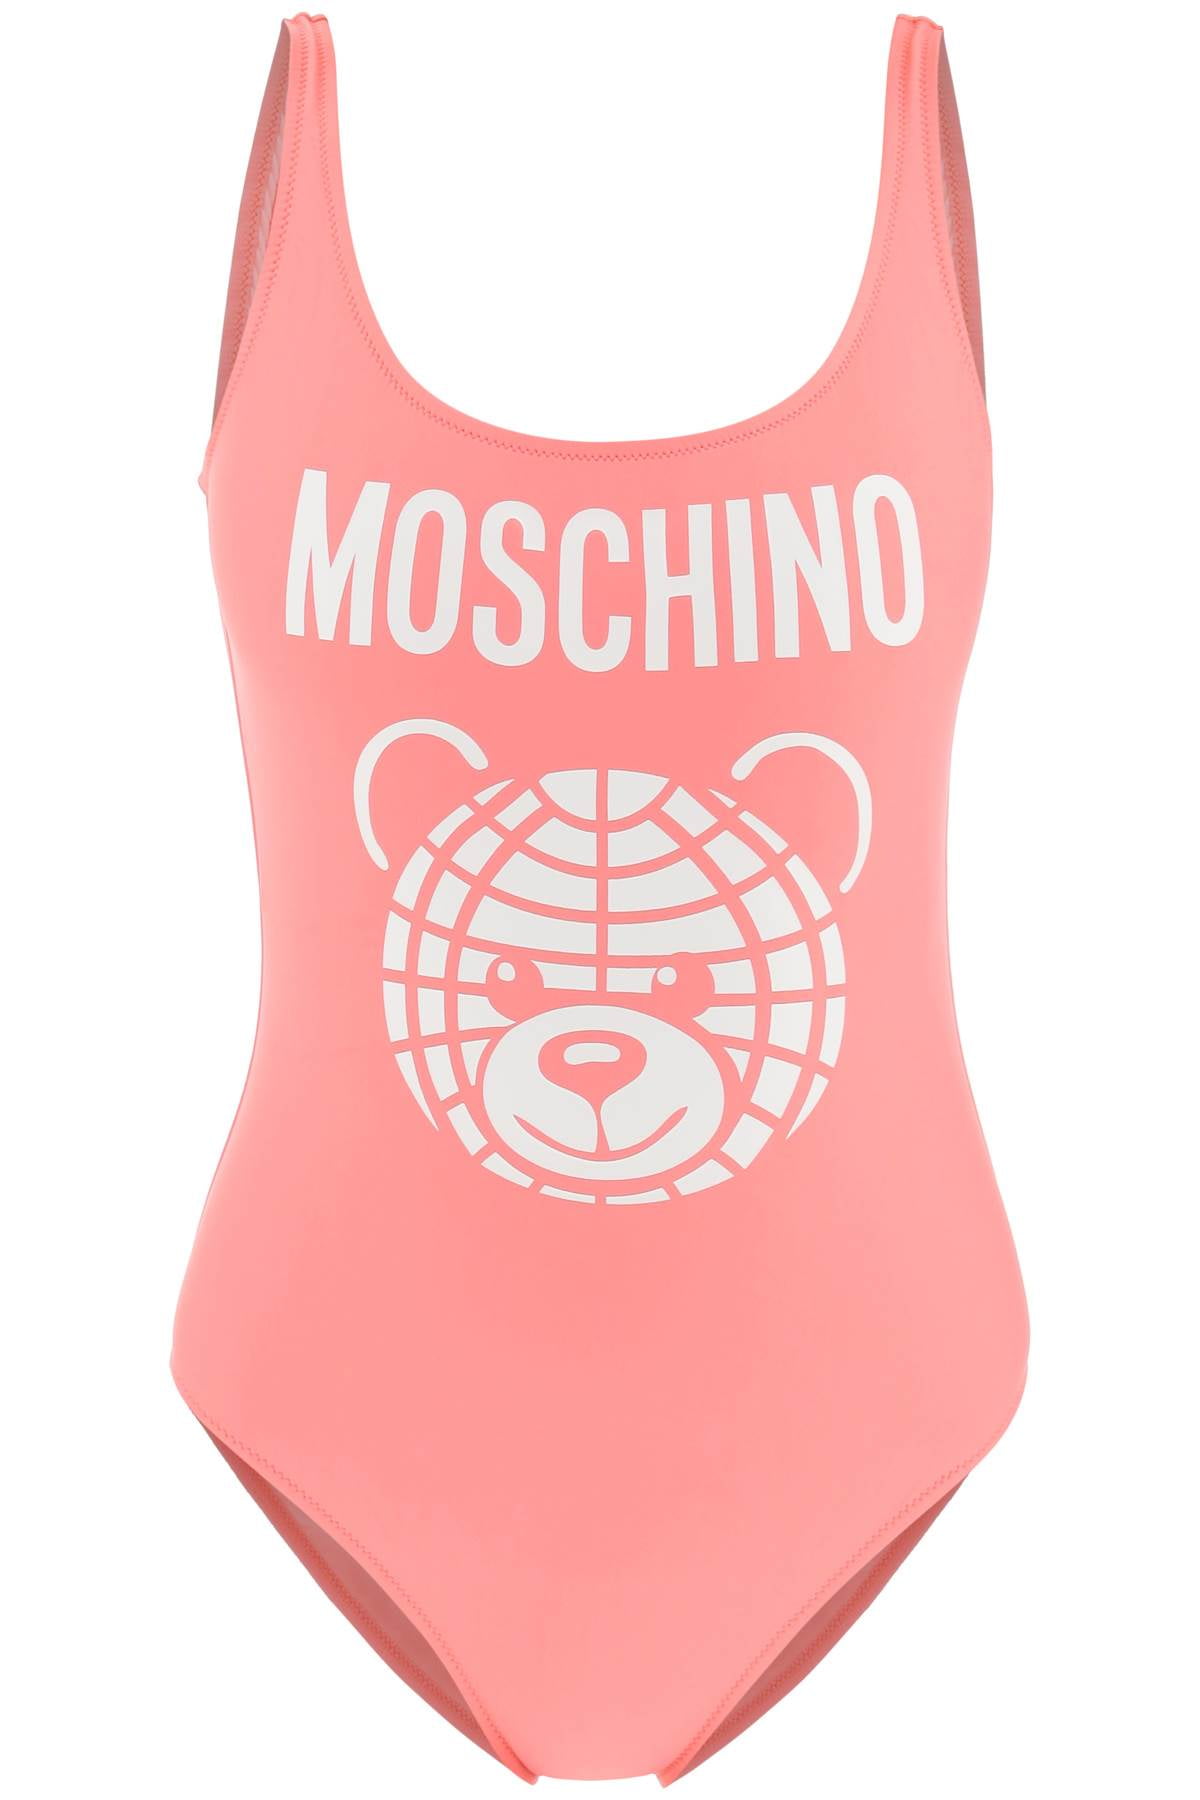 Moschino womens Teddy Bear One-Piece, 38, Pink - Walmart.com